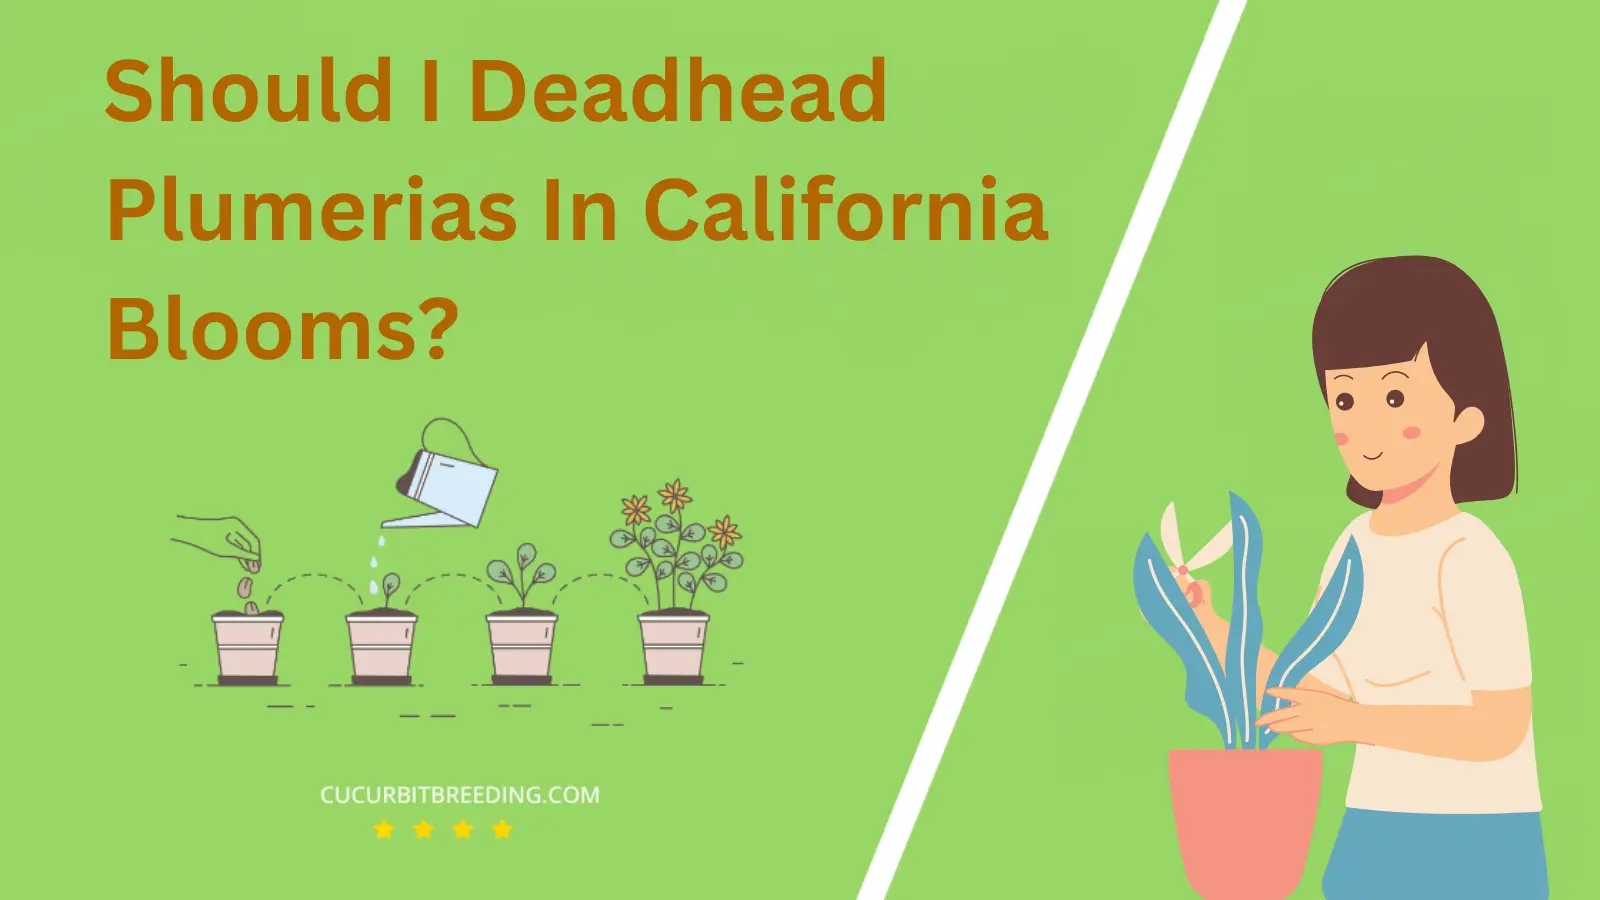 Should I Deadhead Plumerias In California Blooms?